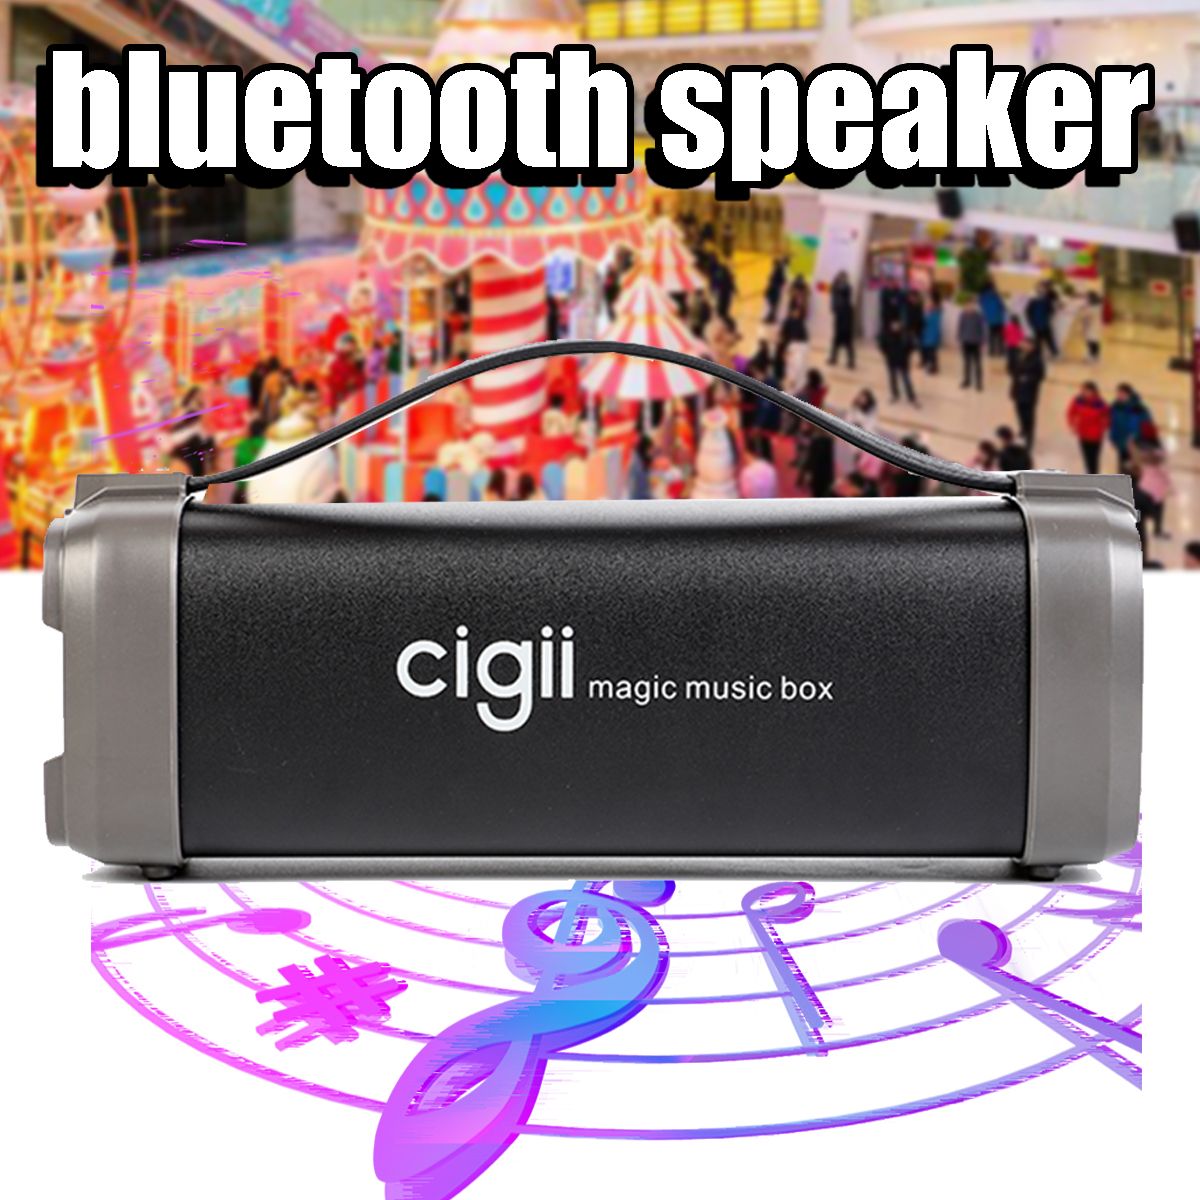 CIGII-F52-1500mAh-Wireless-Portable-bluetooth-Speaker-Subwoofer-Surround-Support-35mm-AUX-TF-Card-FM-1568762